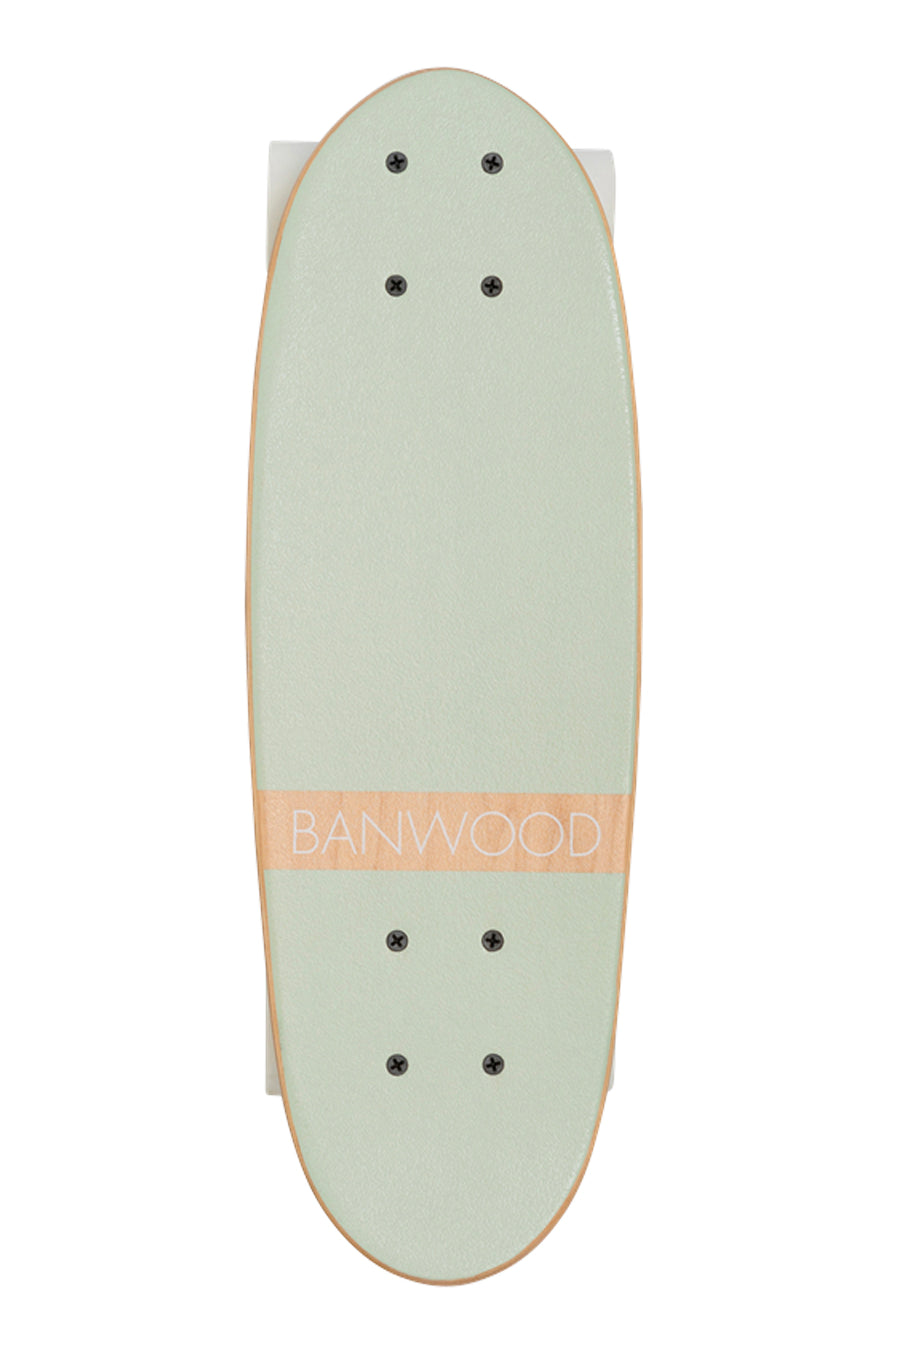 banwood-skateboard-pale-mint.jpg